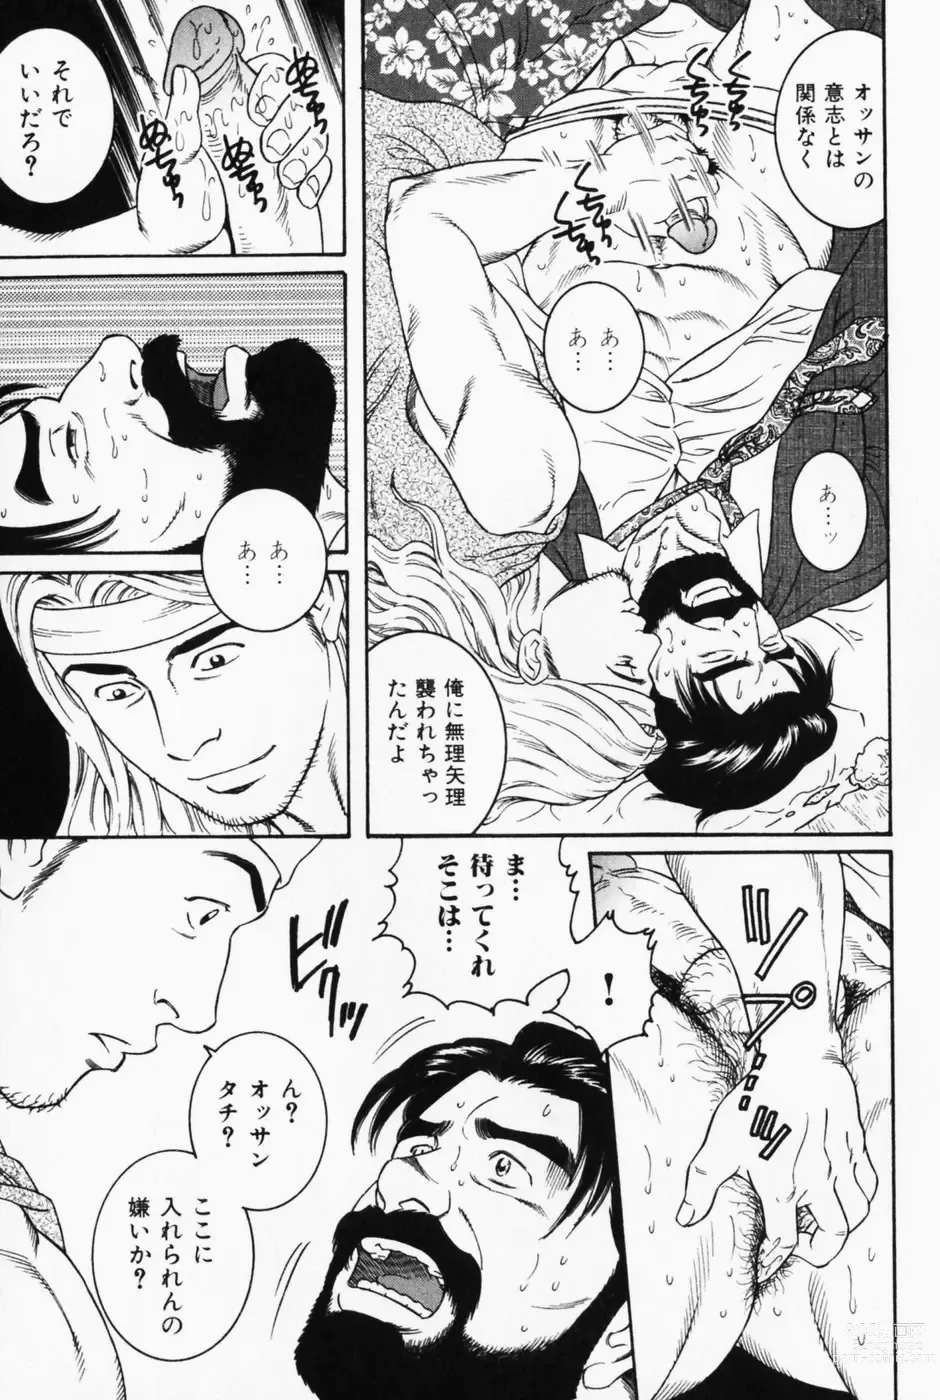 Page 9 of manga Shinkei-sei Ien